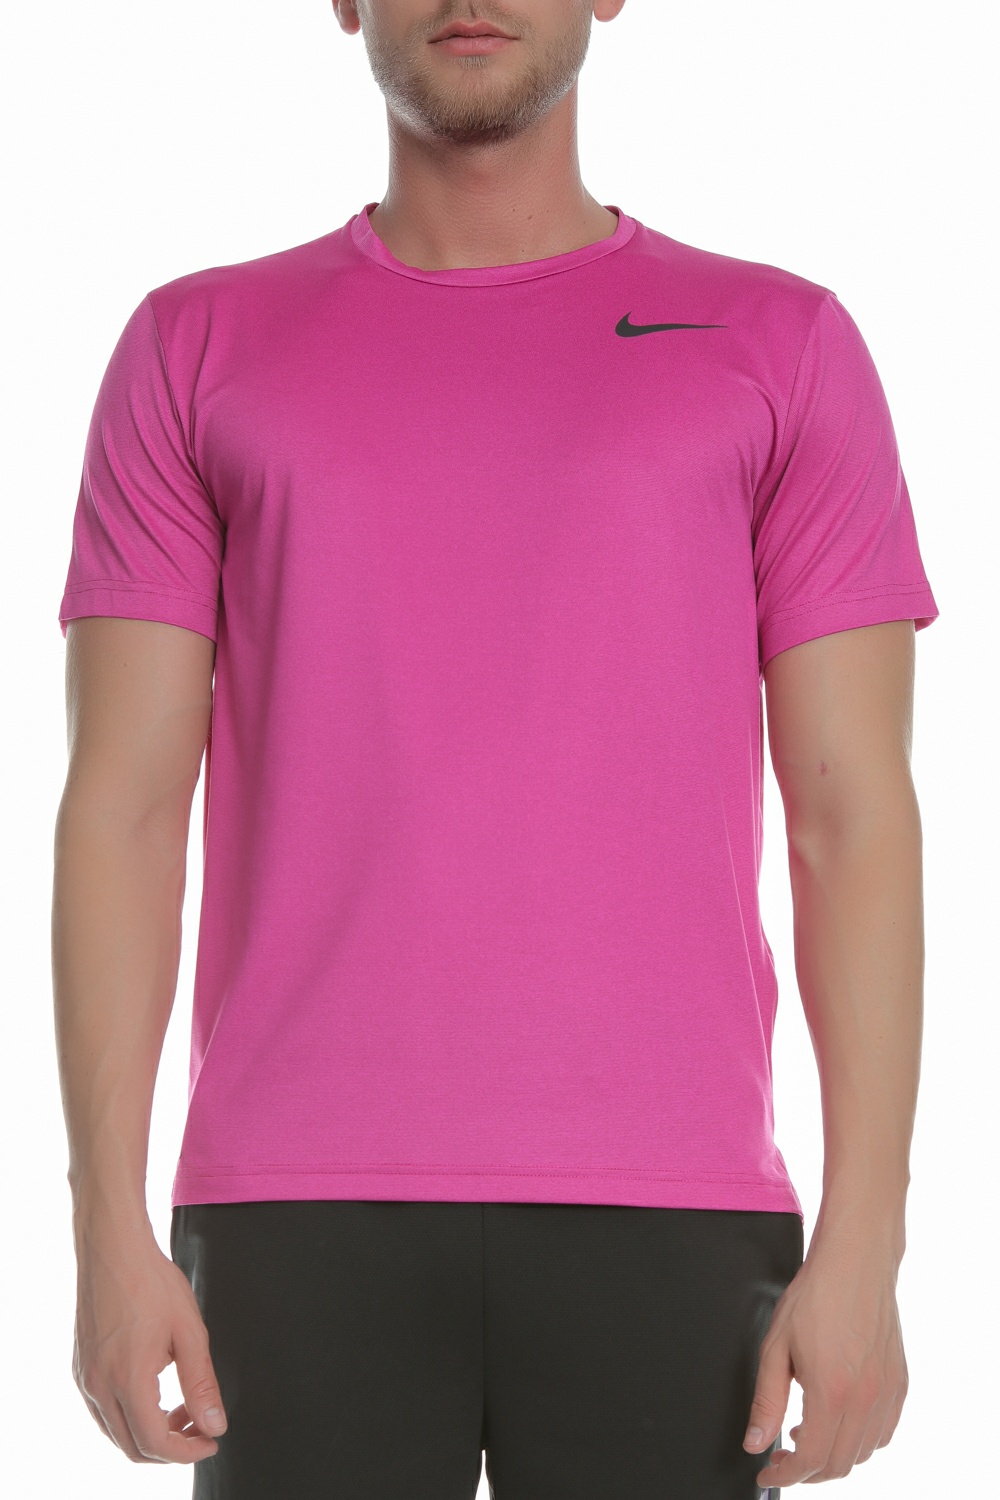 NIKE Ανδρική μπλούζα NIKE BRT TOP SS HPR DRY ροζ